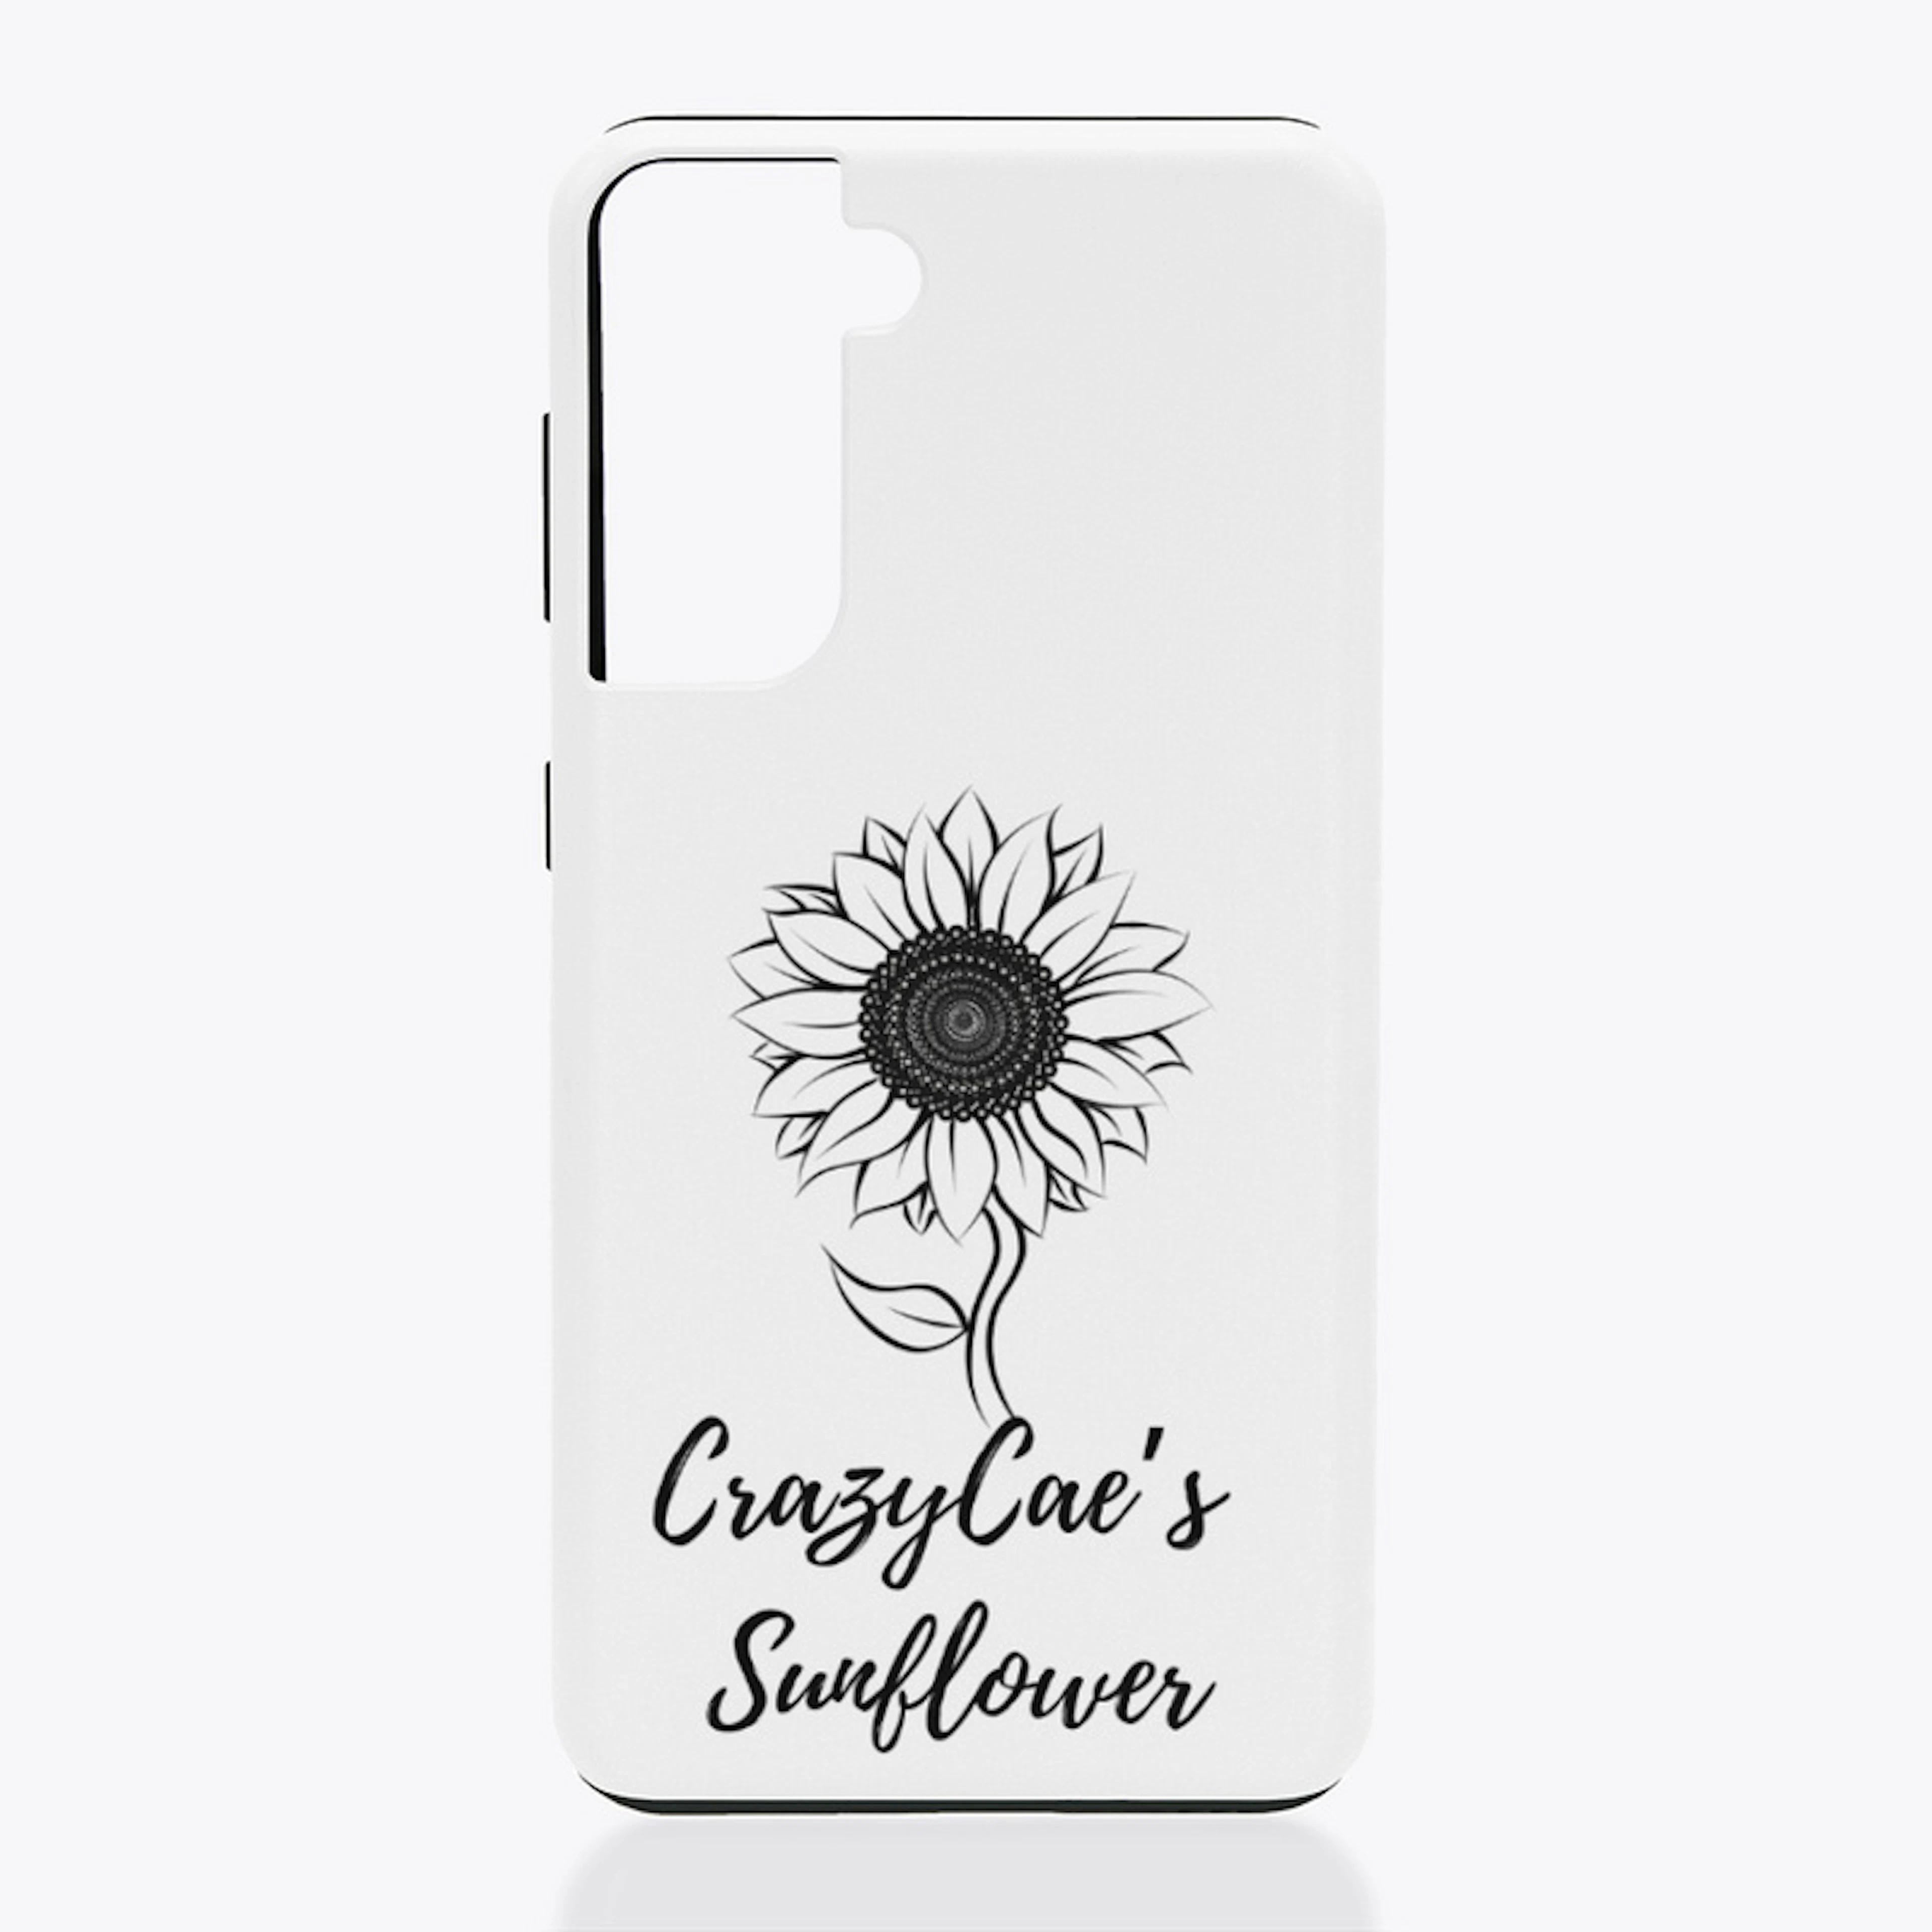 CrazyCae's Sunflowers